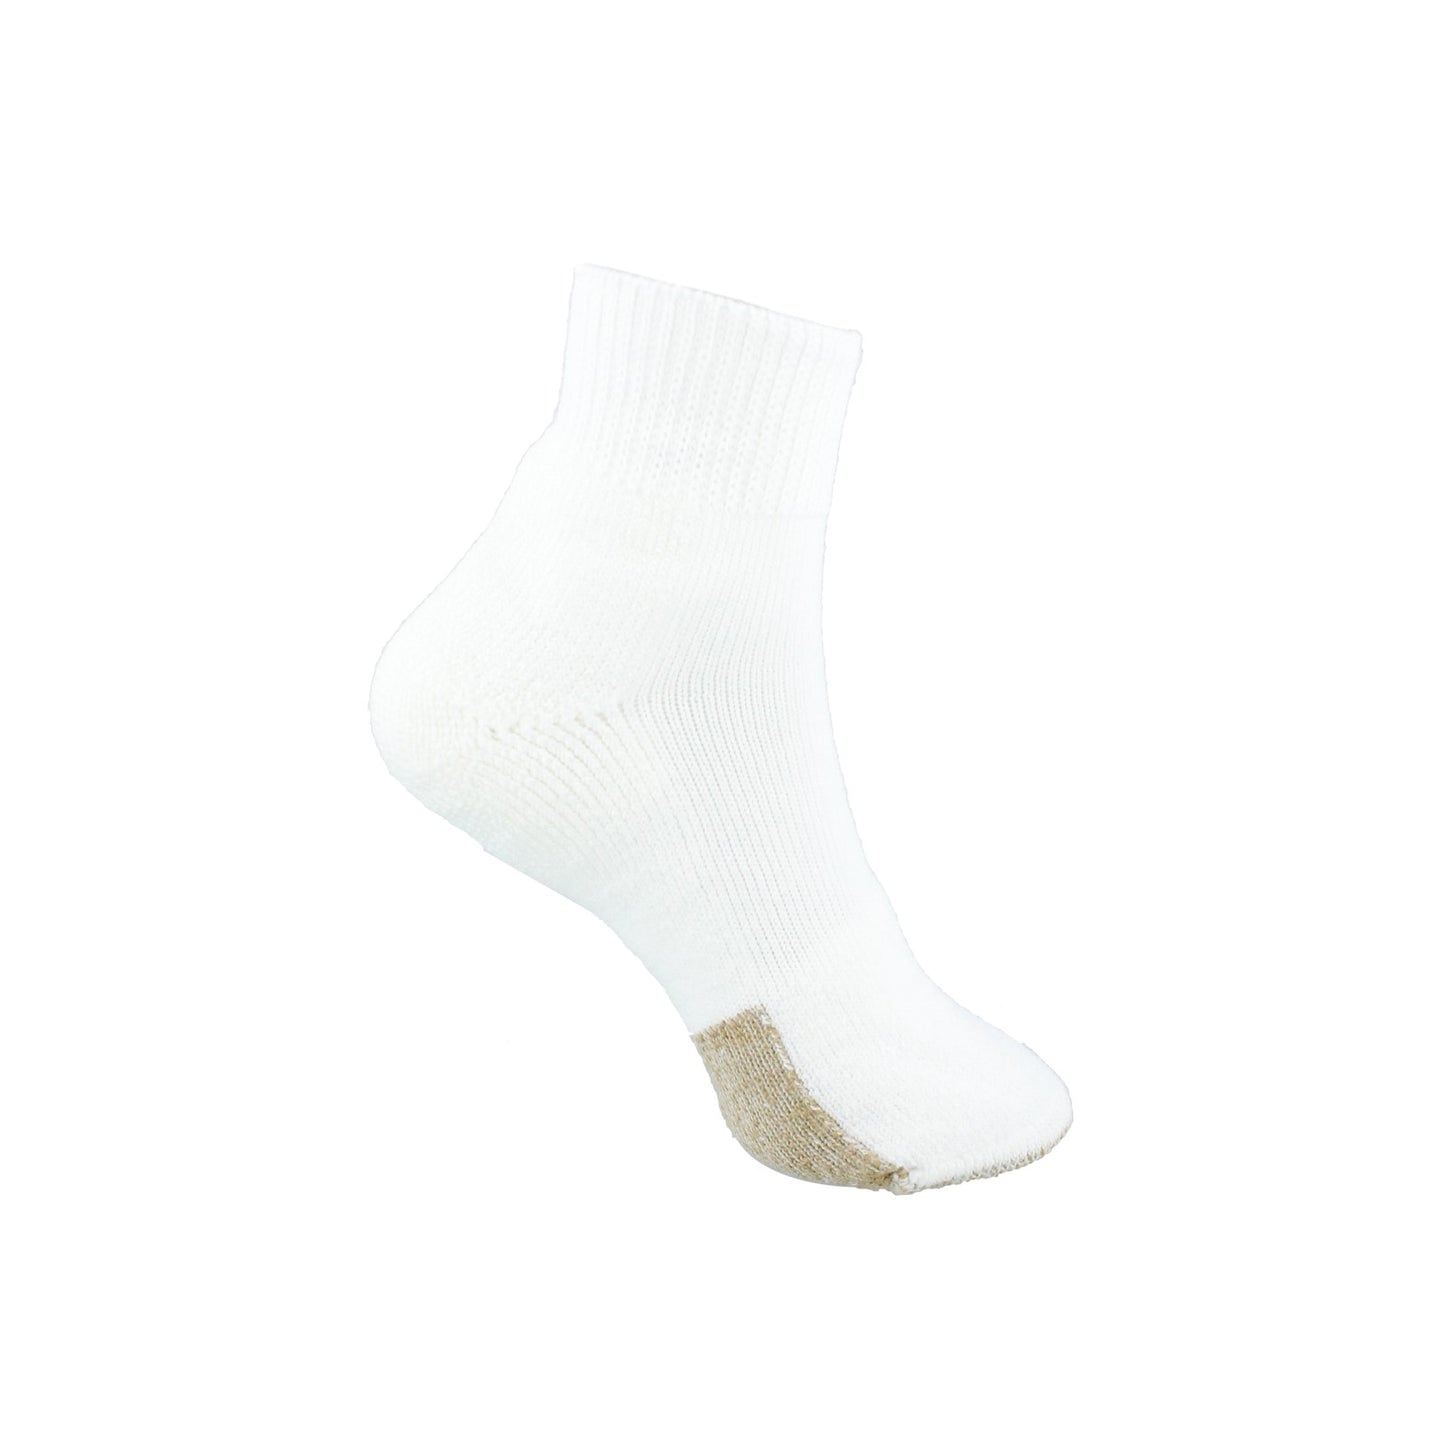 Peltz Shoes  Unisex Thorlo TMX Tennis Socks - Large - 1 Pack White TMX-13 004